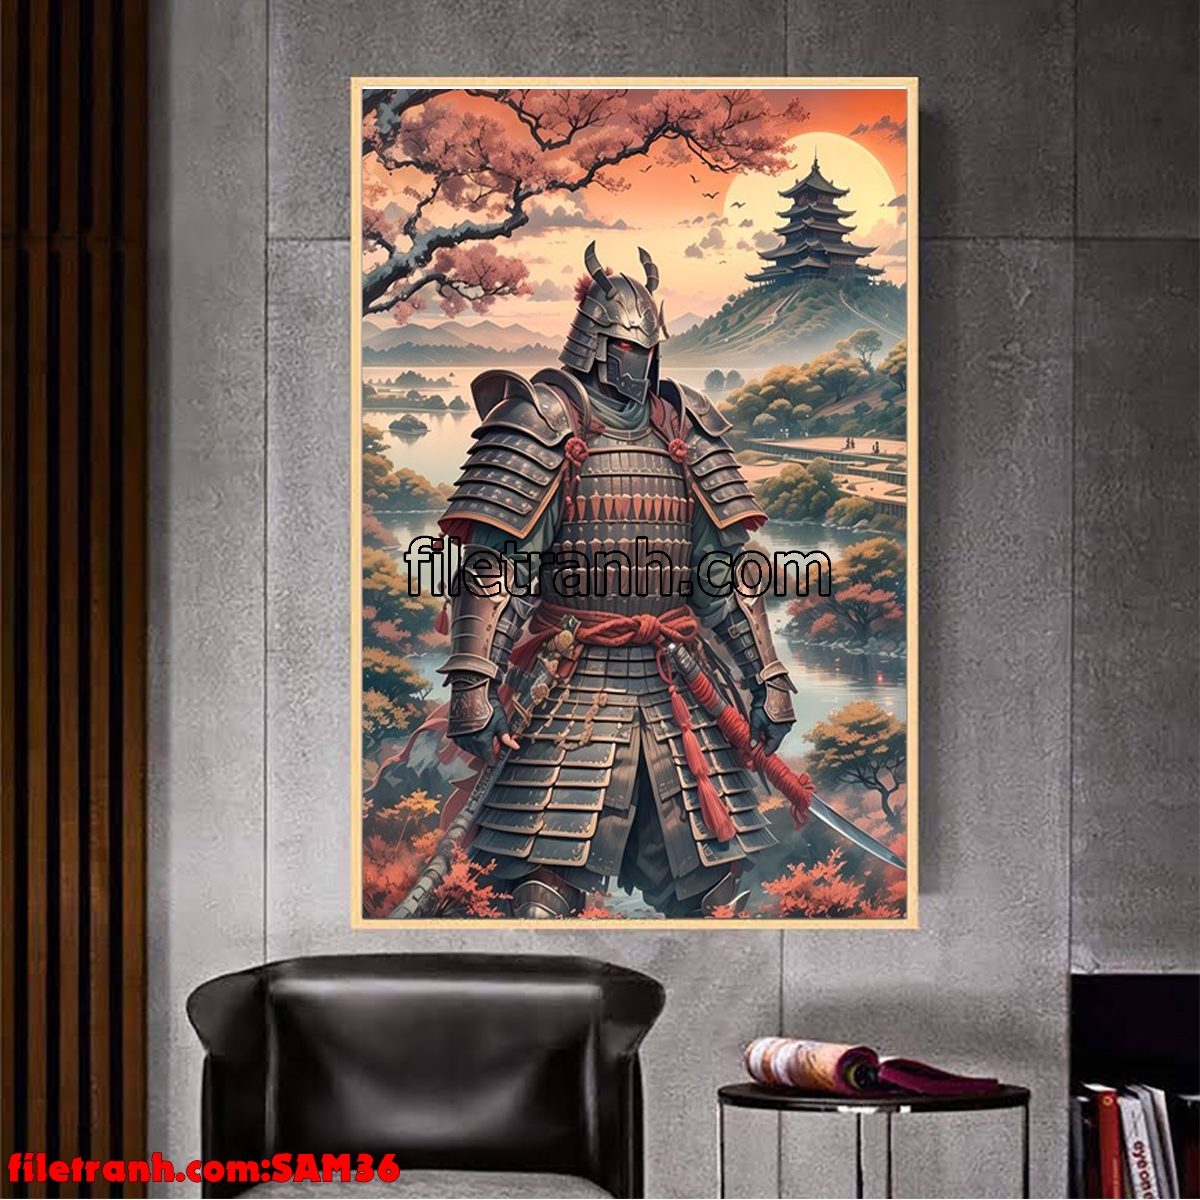 https://filetranh.com/samurai/file-tranh-samurai-vo-si-nhat-ban-sam36.html